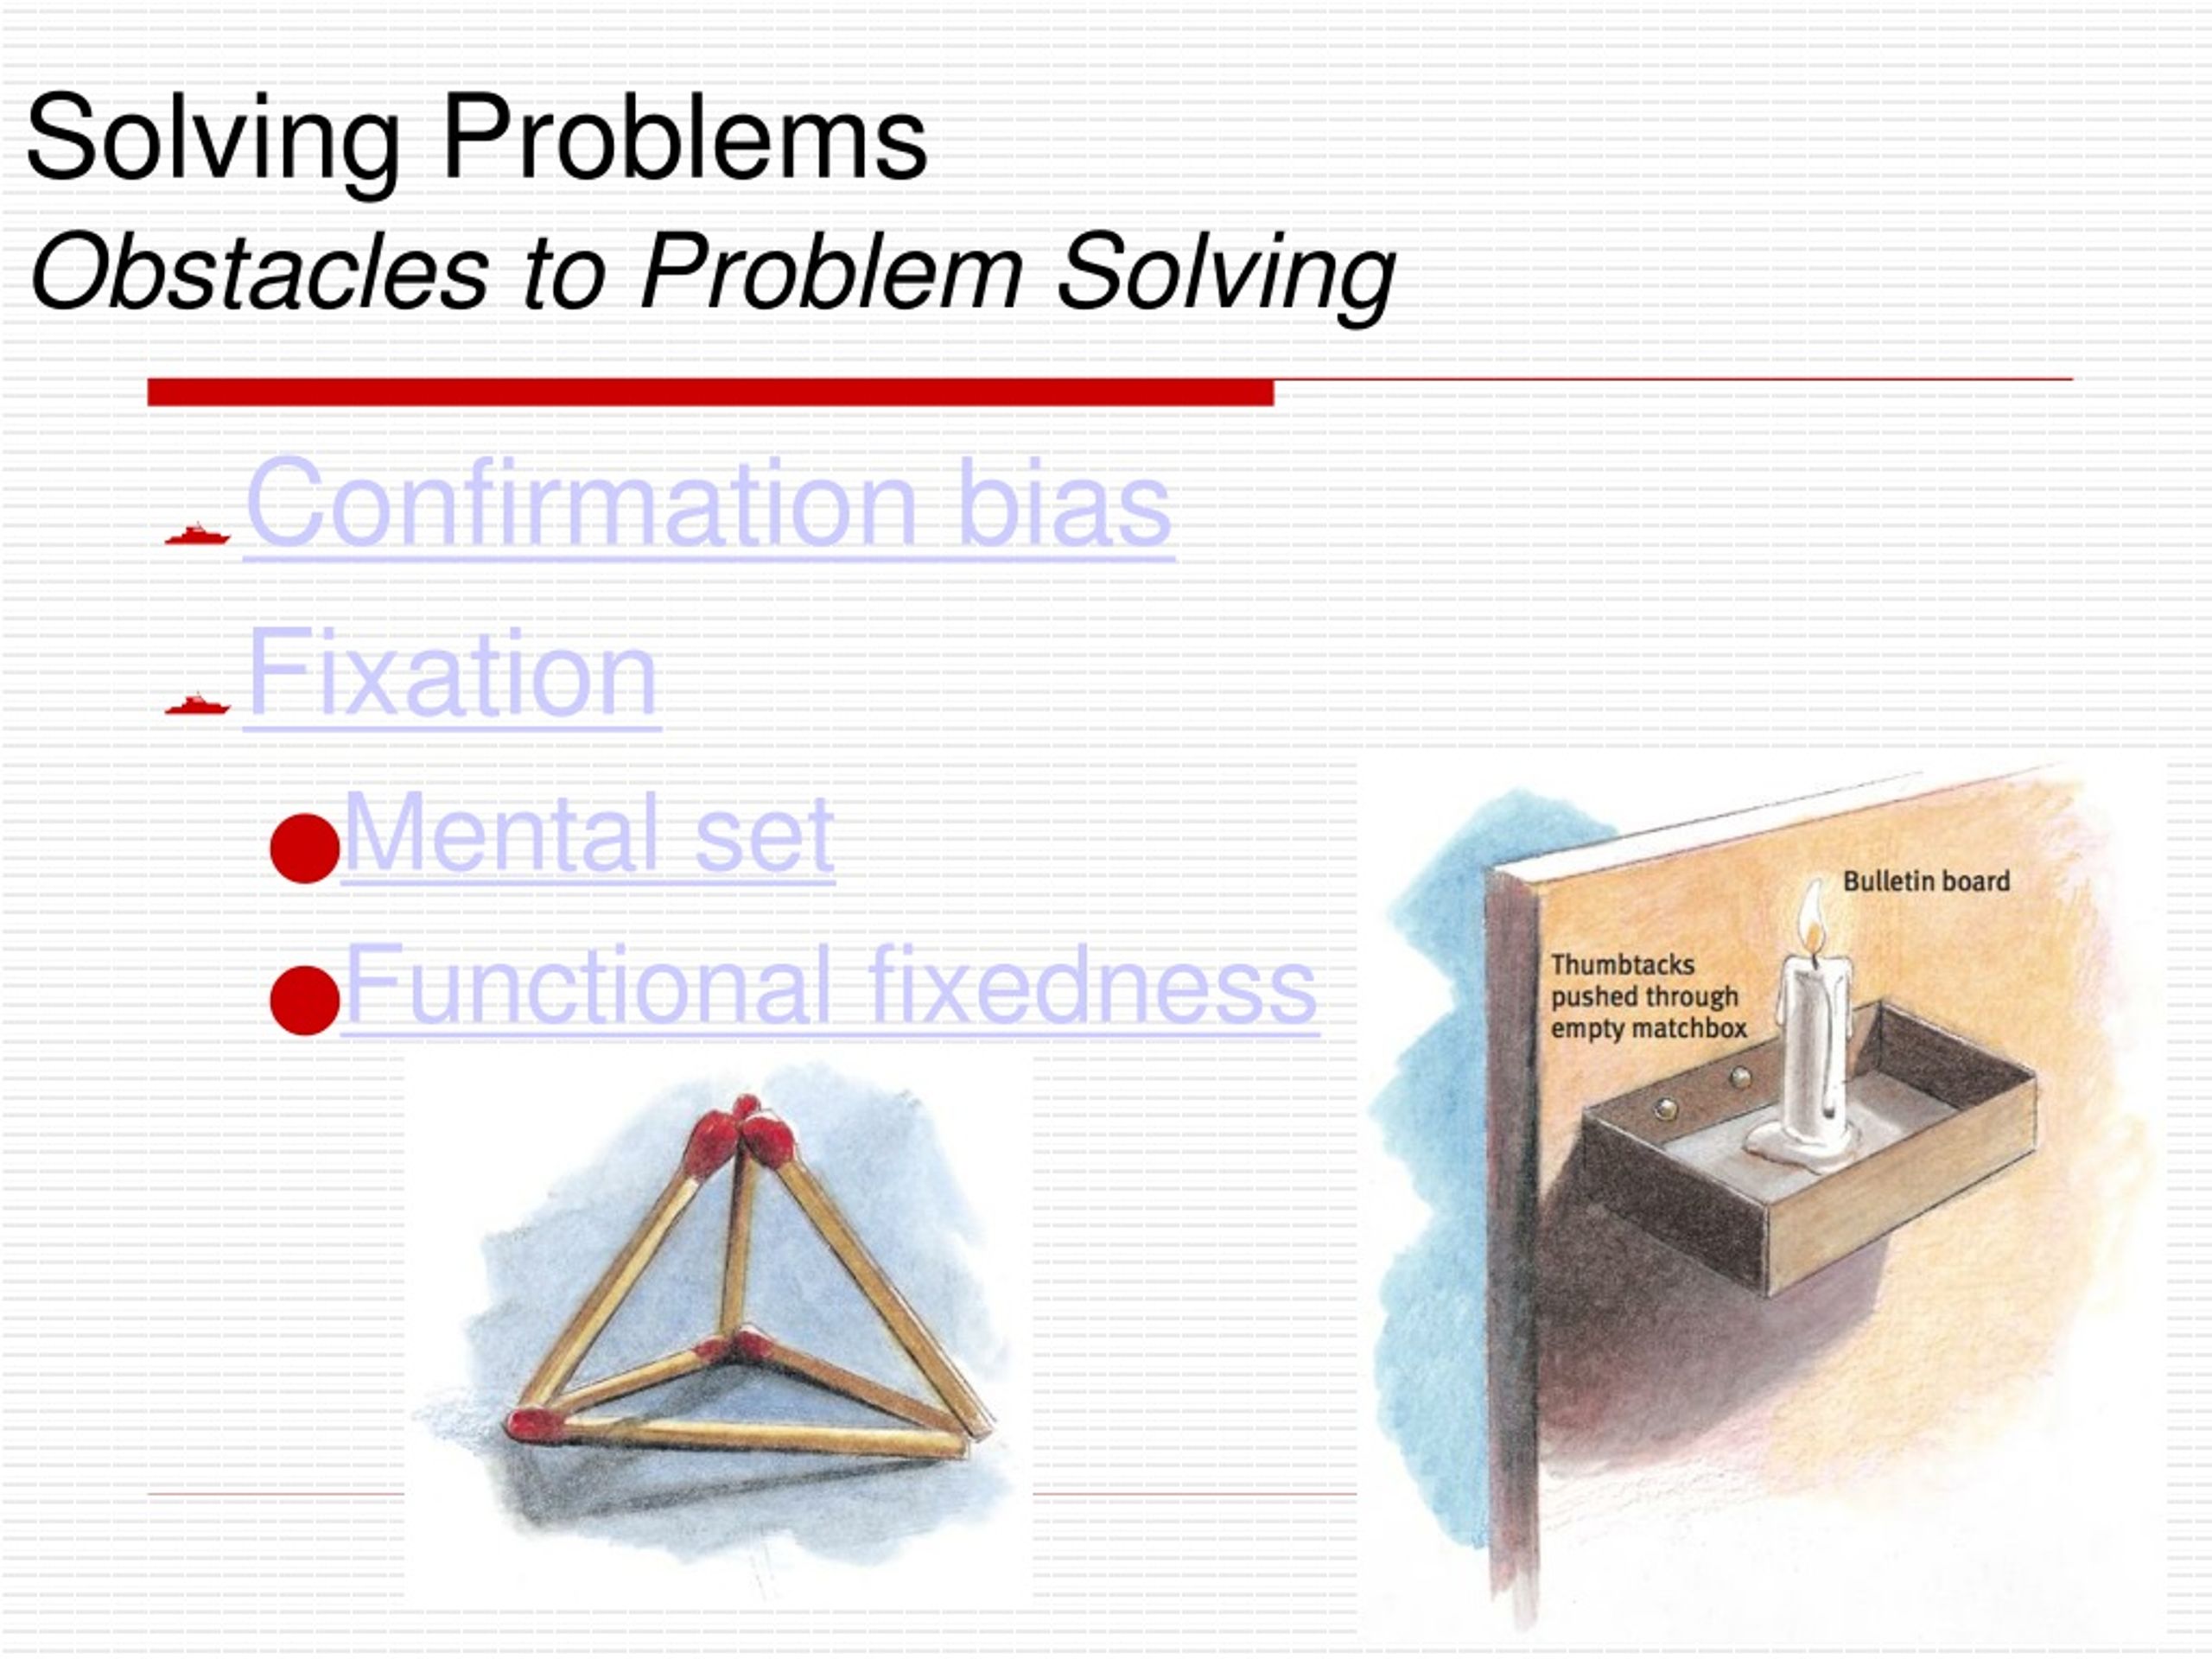 problem solving fixedness definition